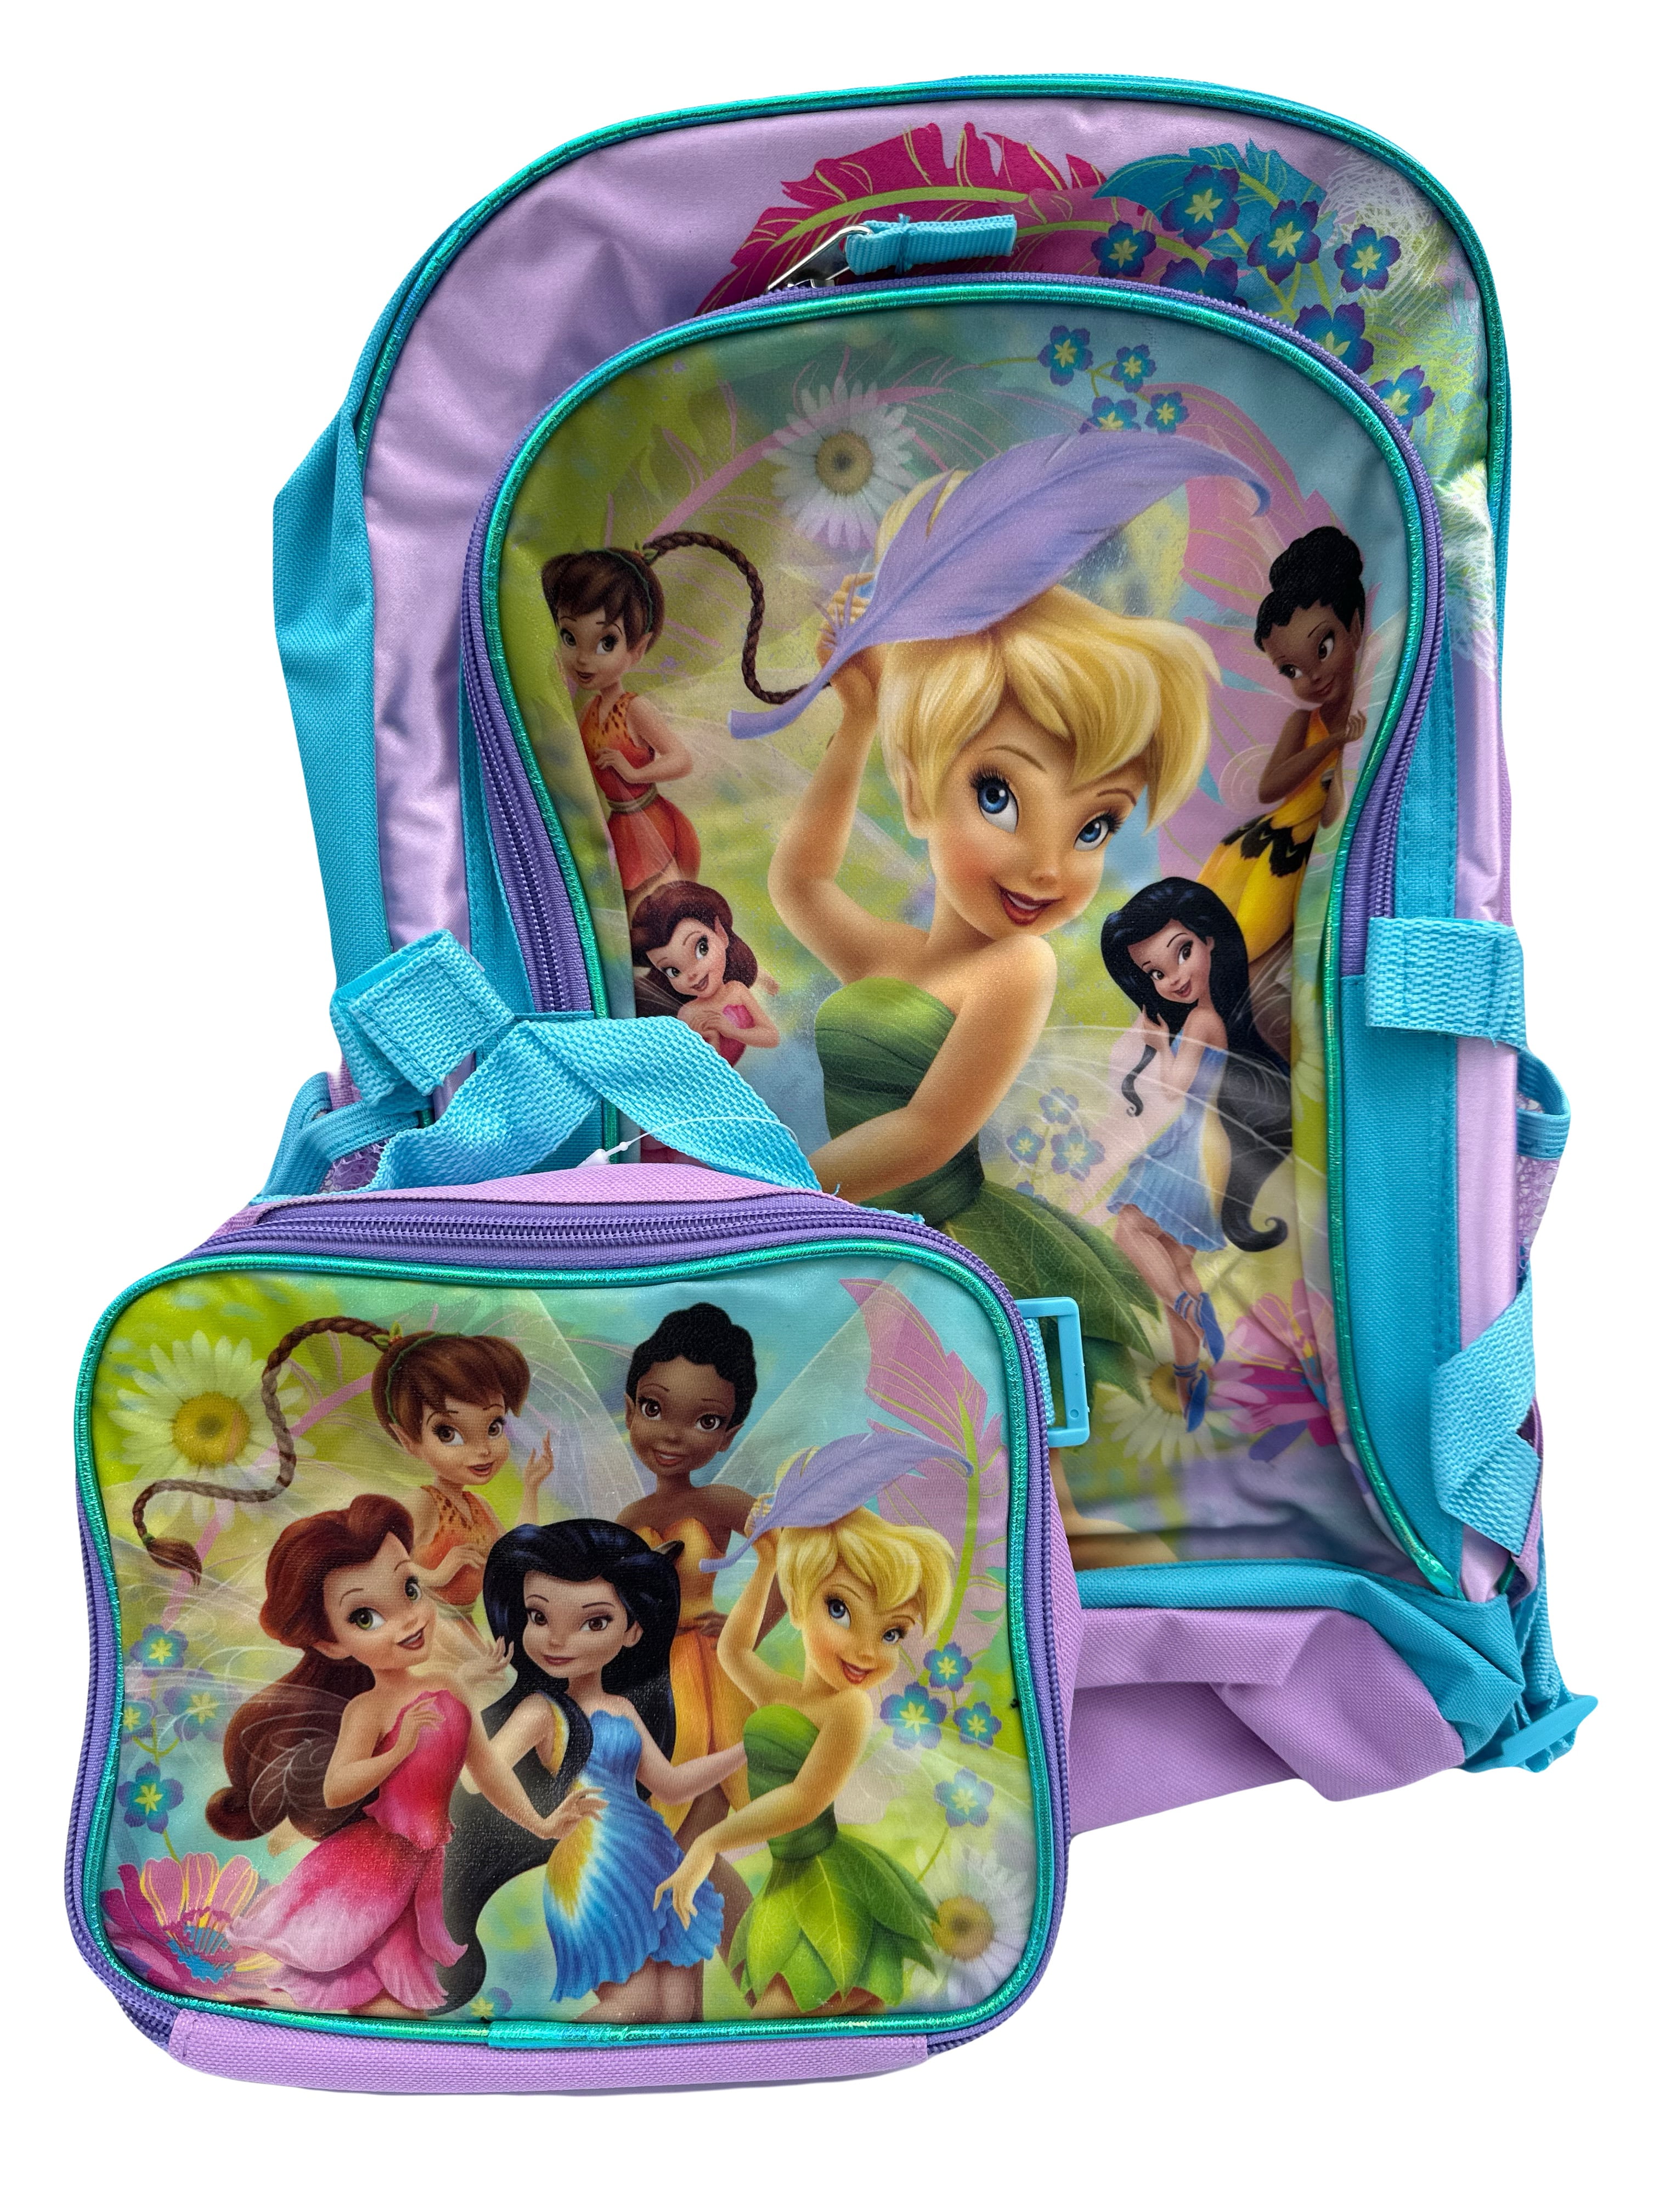 Disney Fairies Tinker Bell Backpack w/detachable Lunch Bag